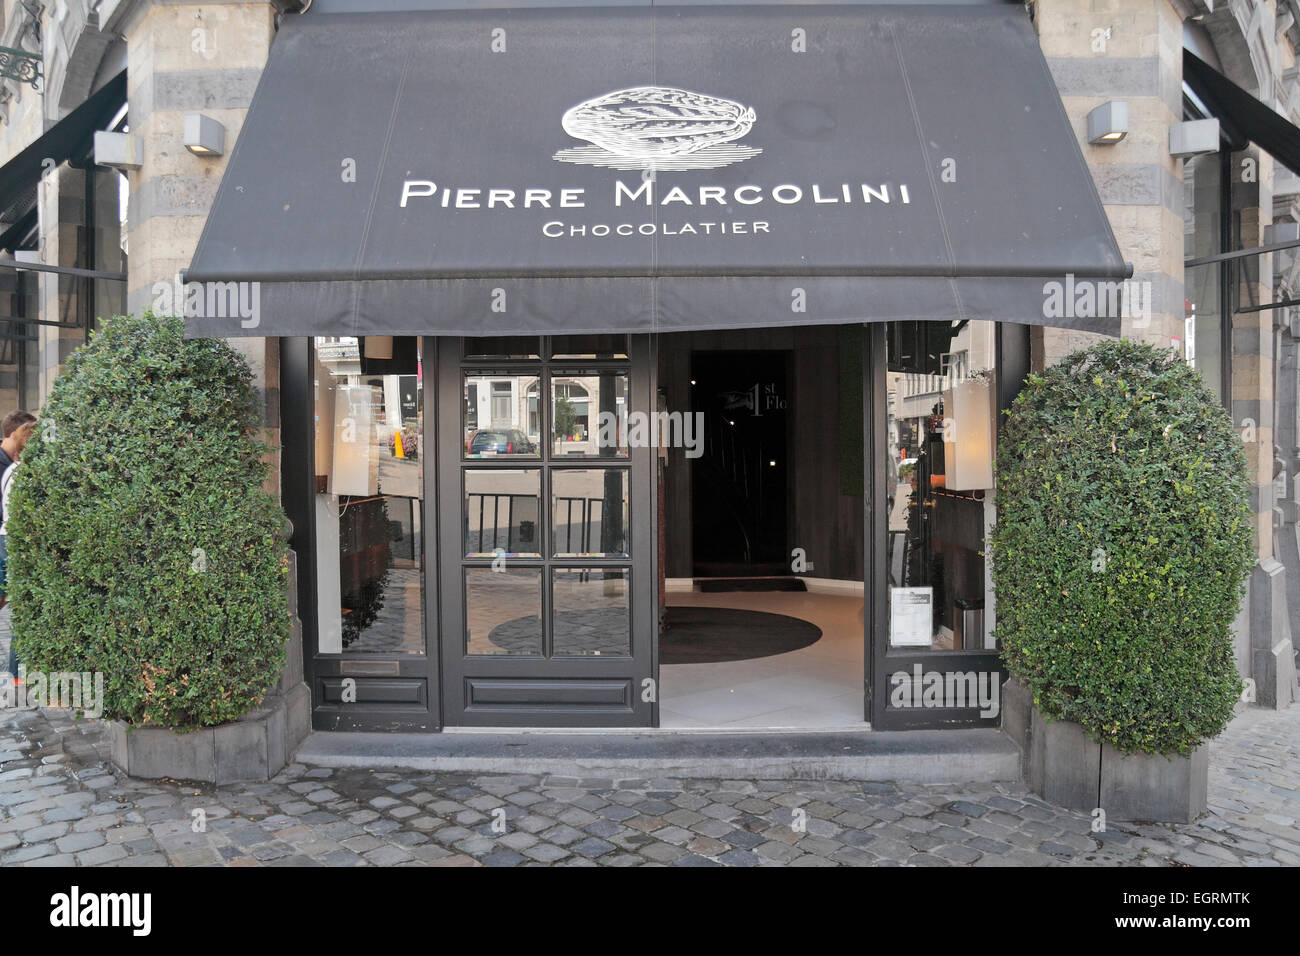 The Pierre Marcolini Chocolatier in Brussels, Belgium. Stock Photo